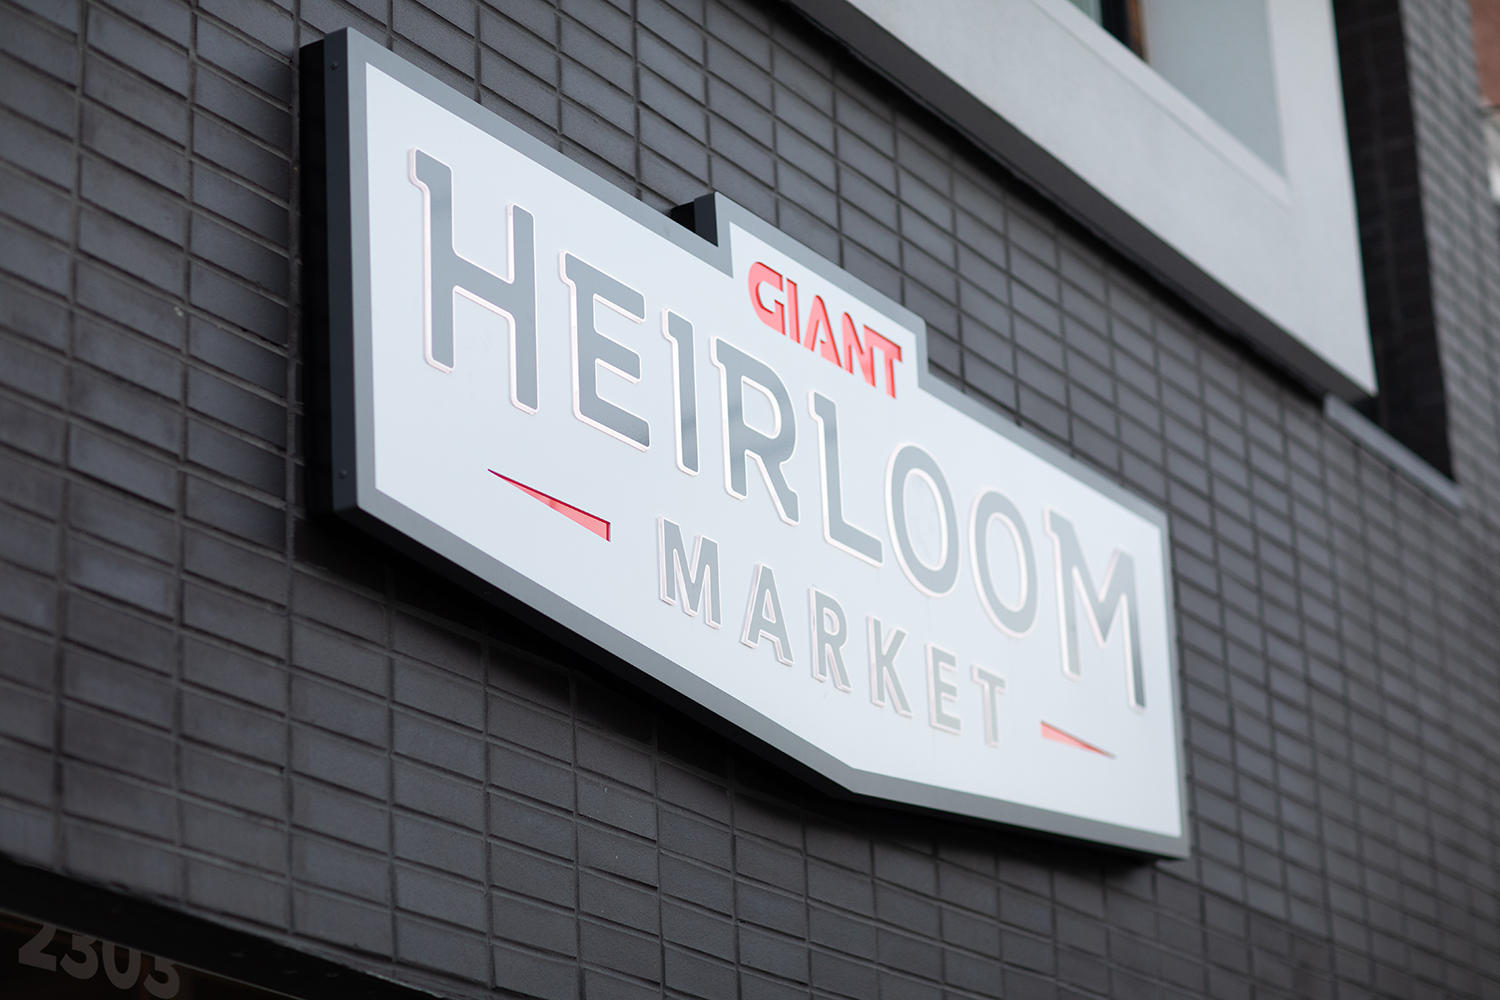 GIANT Heirloom Market Photo